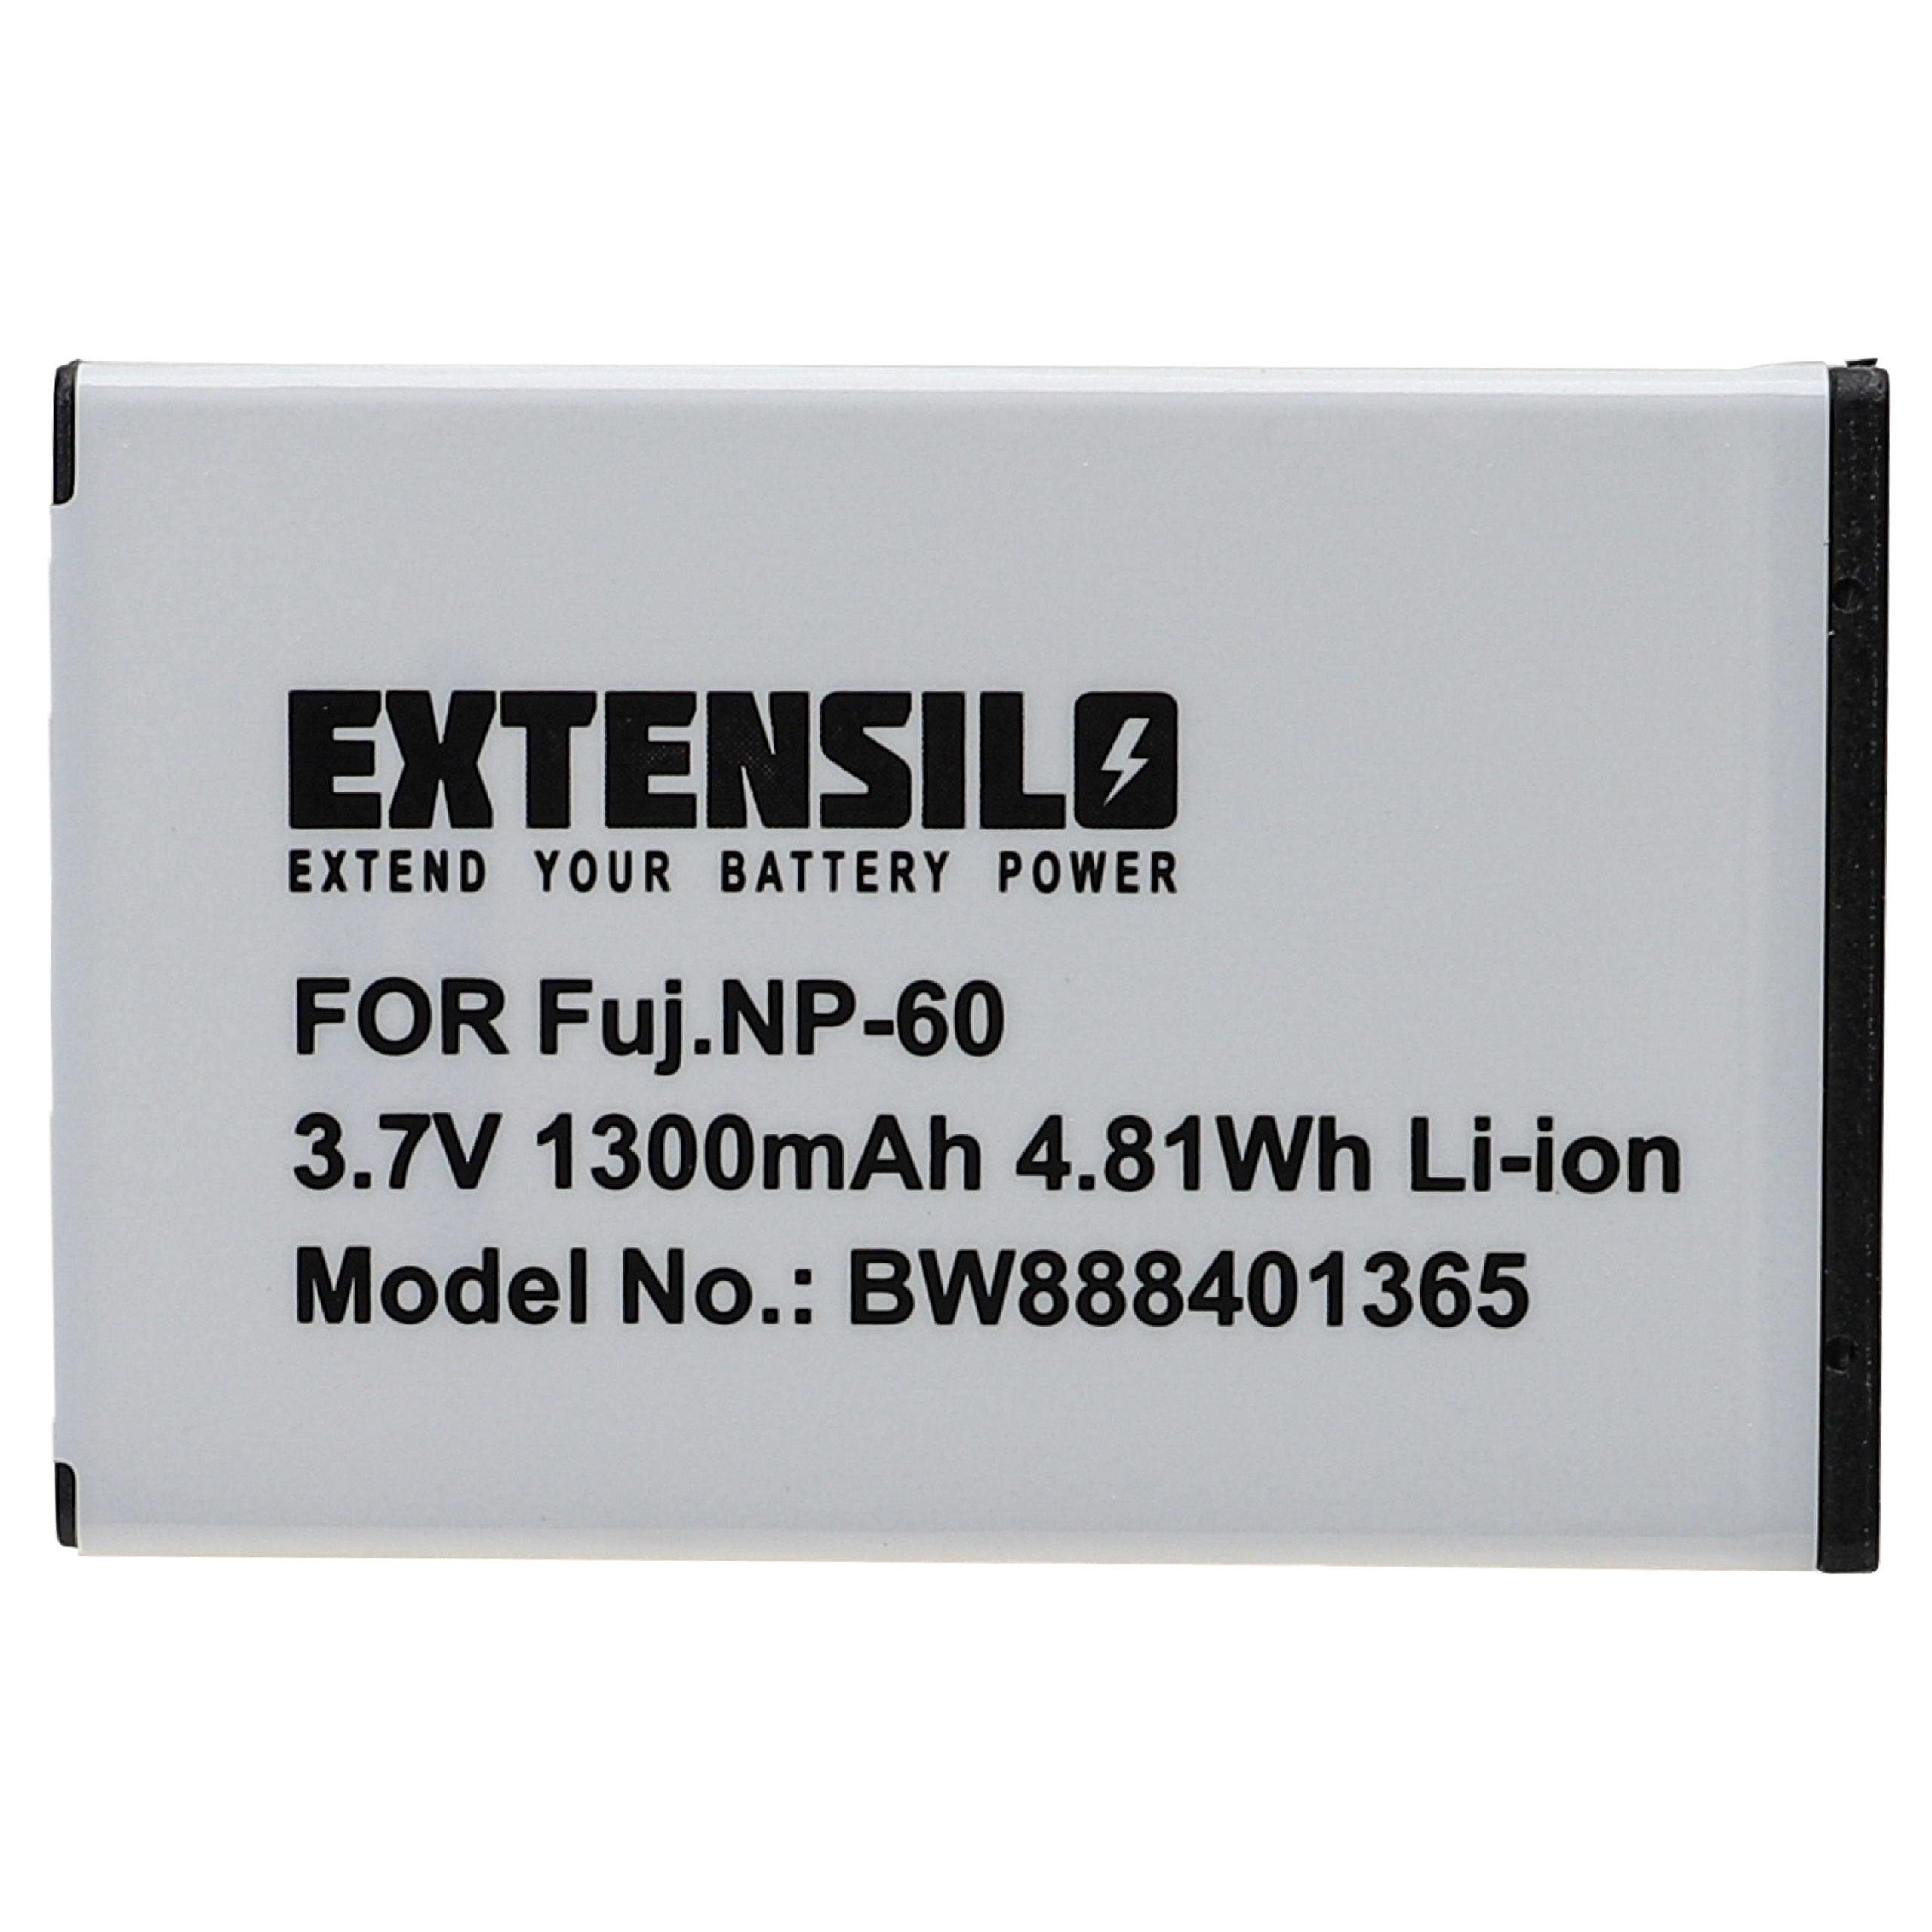 Extensilo kompatibel mit Rainin (3,7 V) E4 pipette E4 1300 mAh XLS+, Li-Ion Kamera-Akku